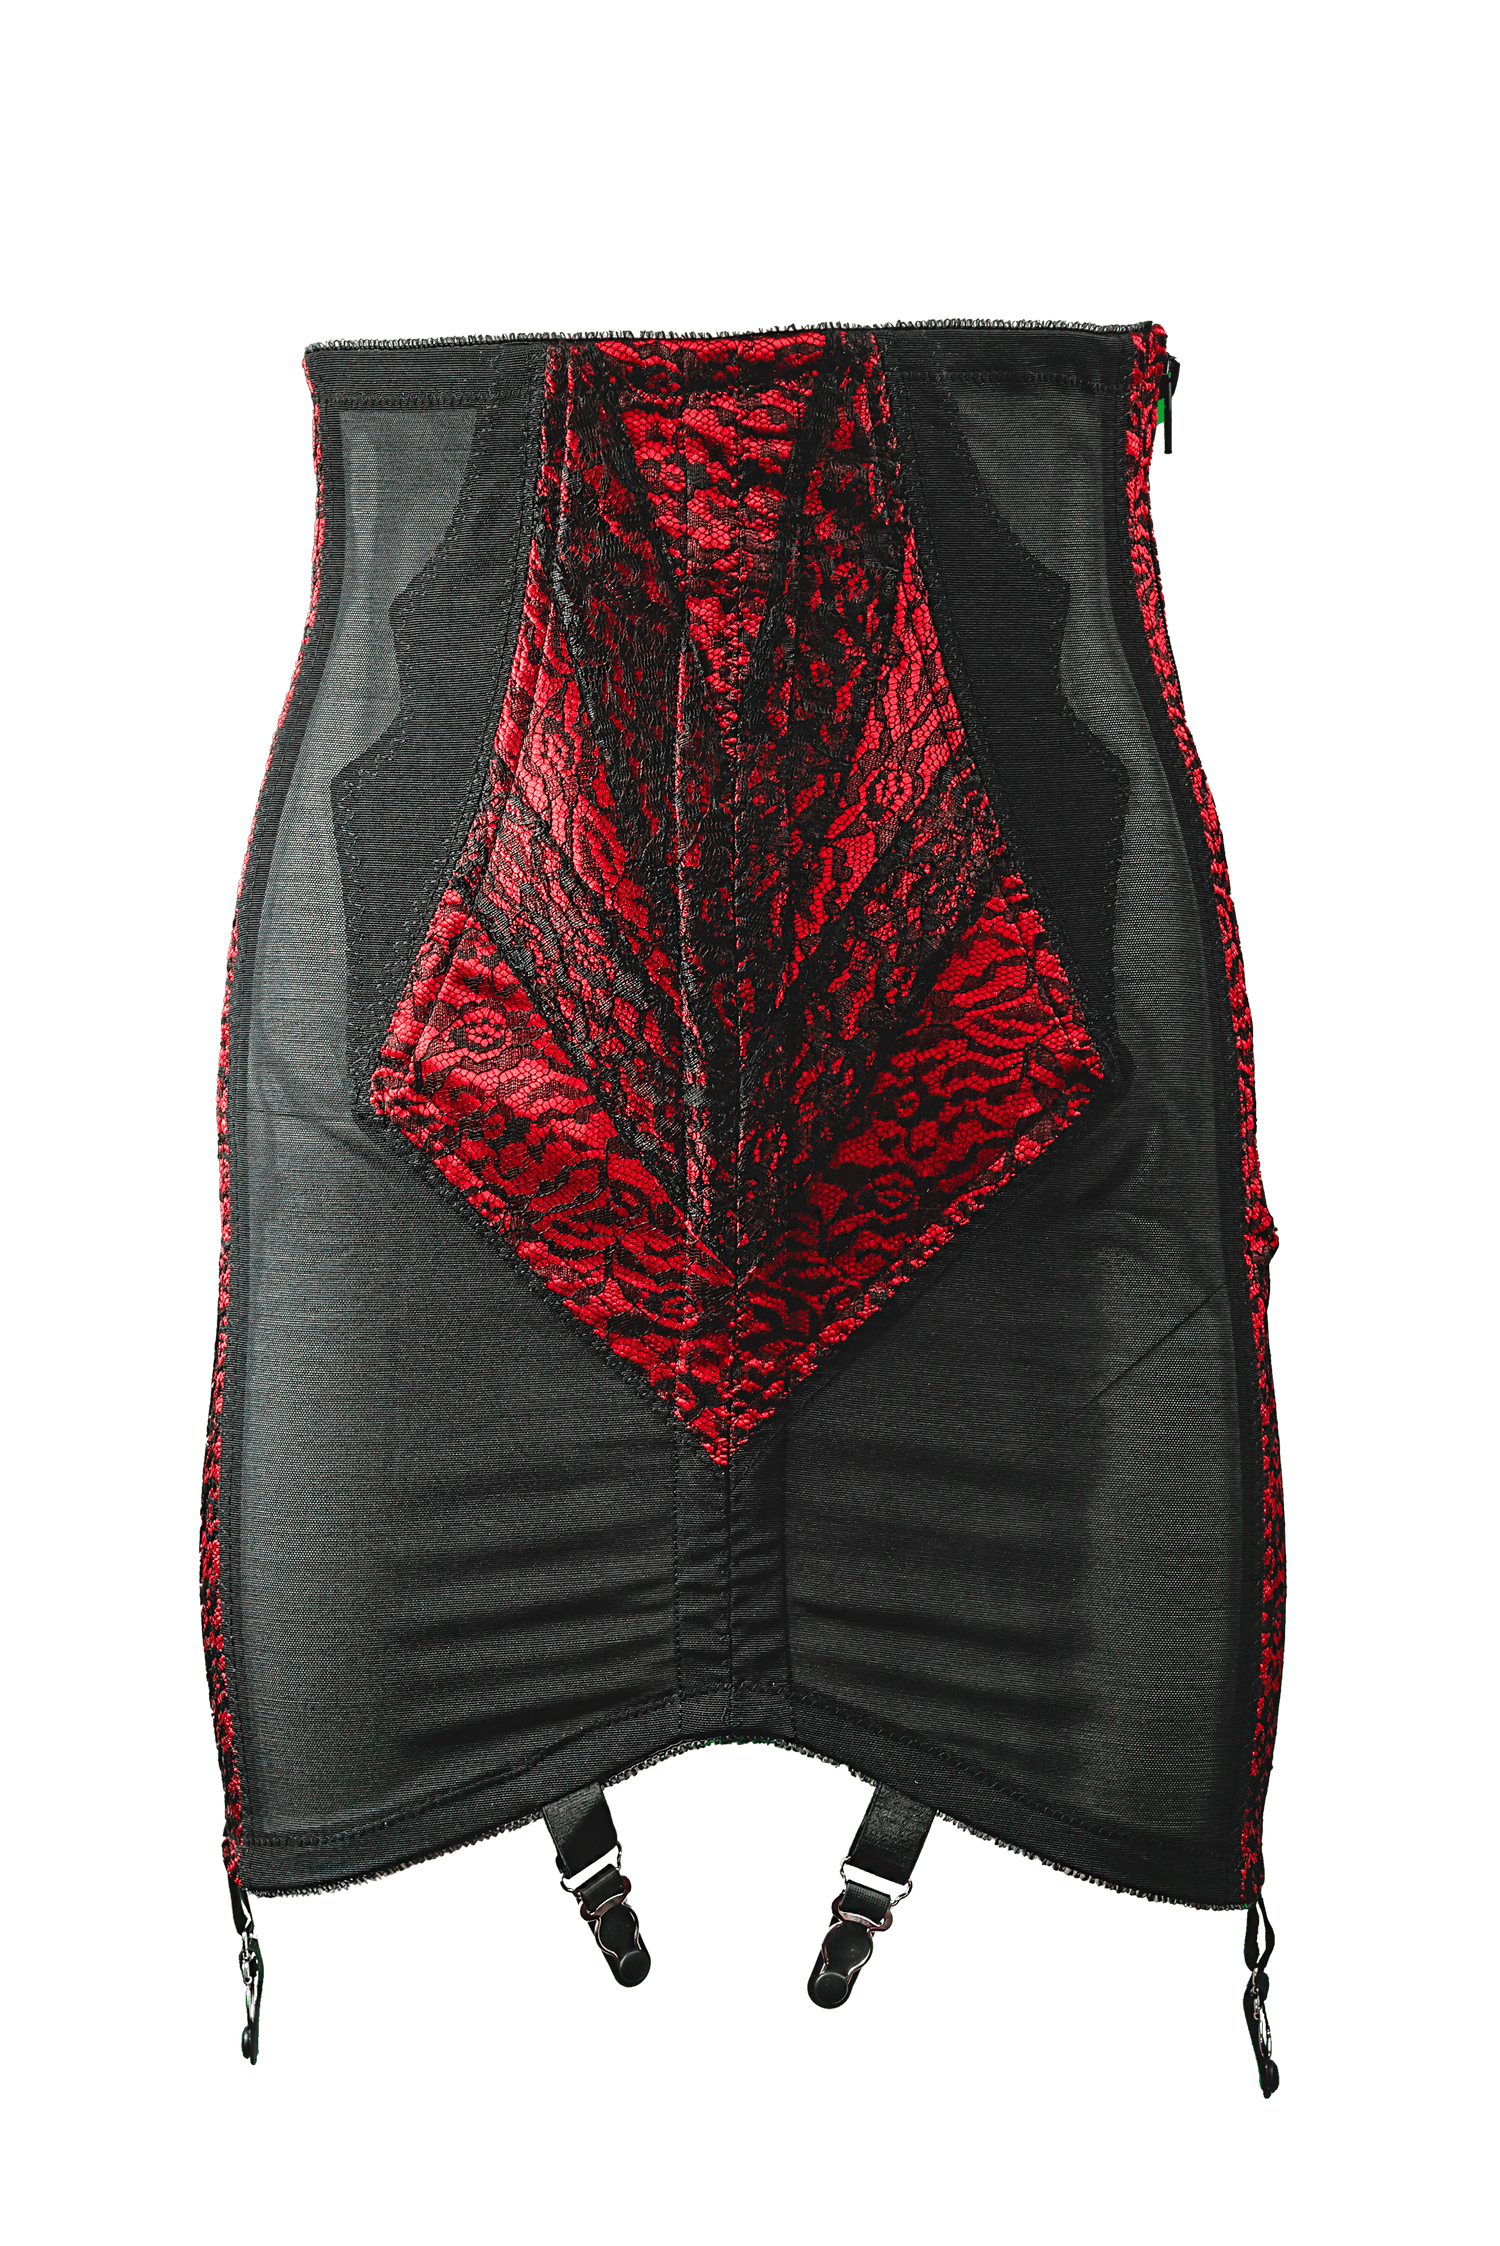 Rago 1294 Open bottom Girdle RedBlack garters & Uruguay